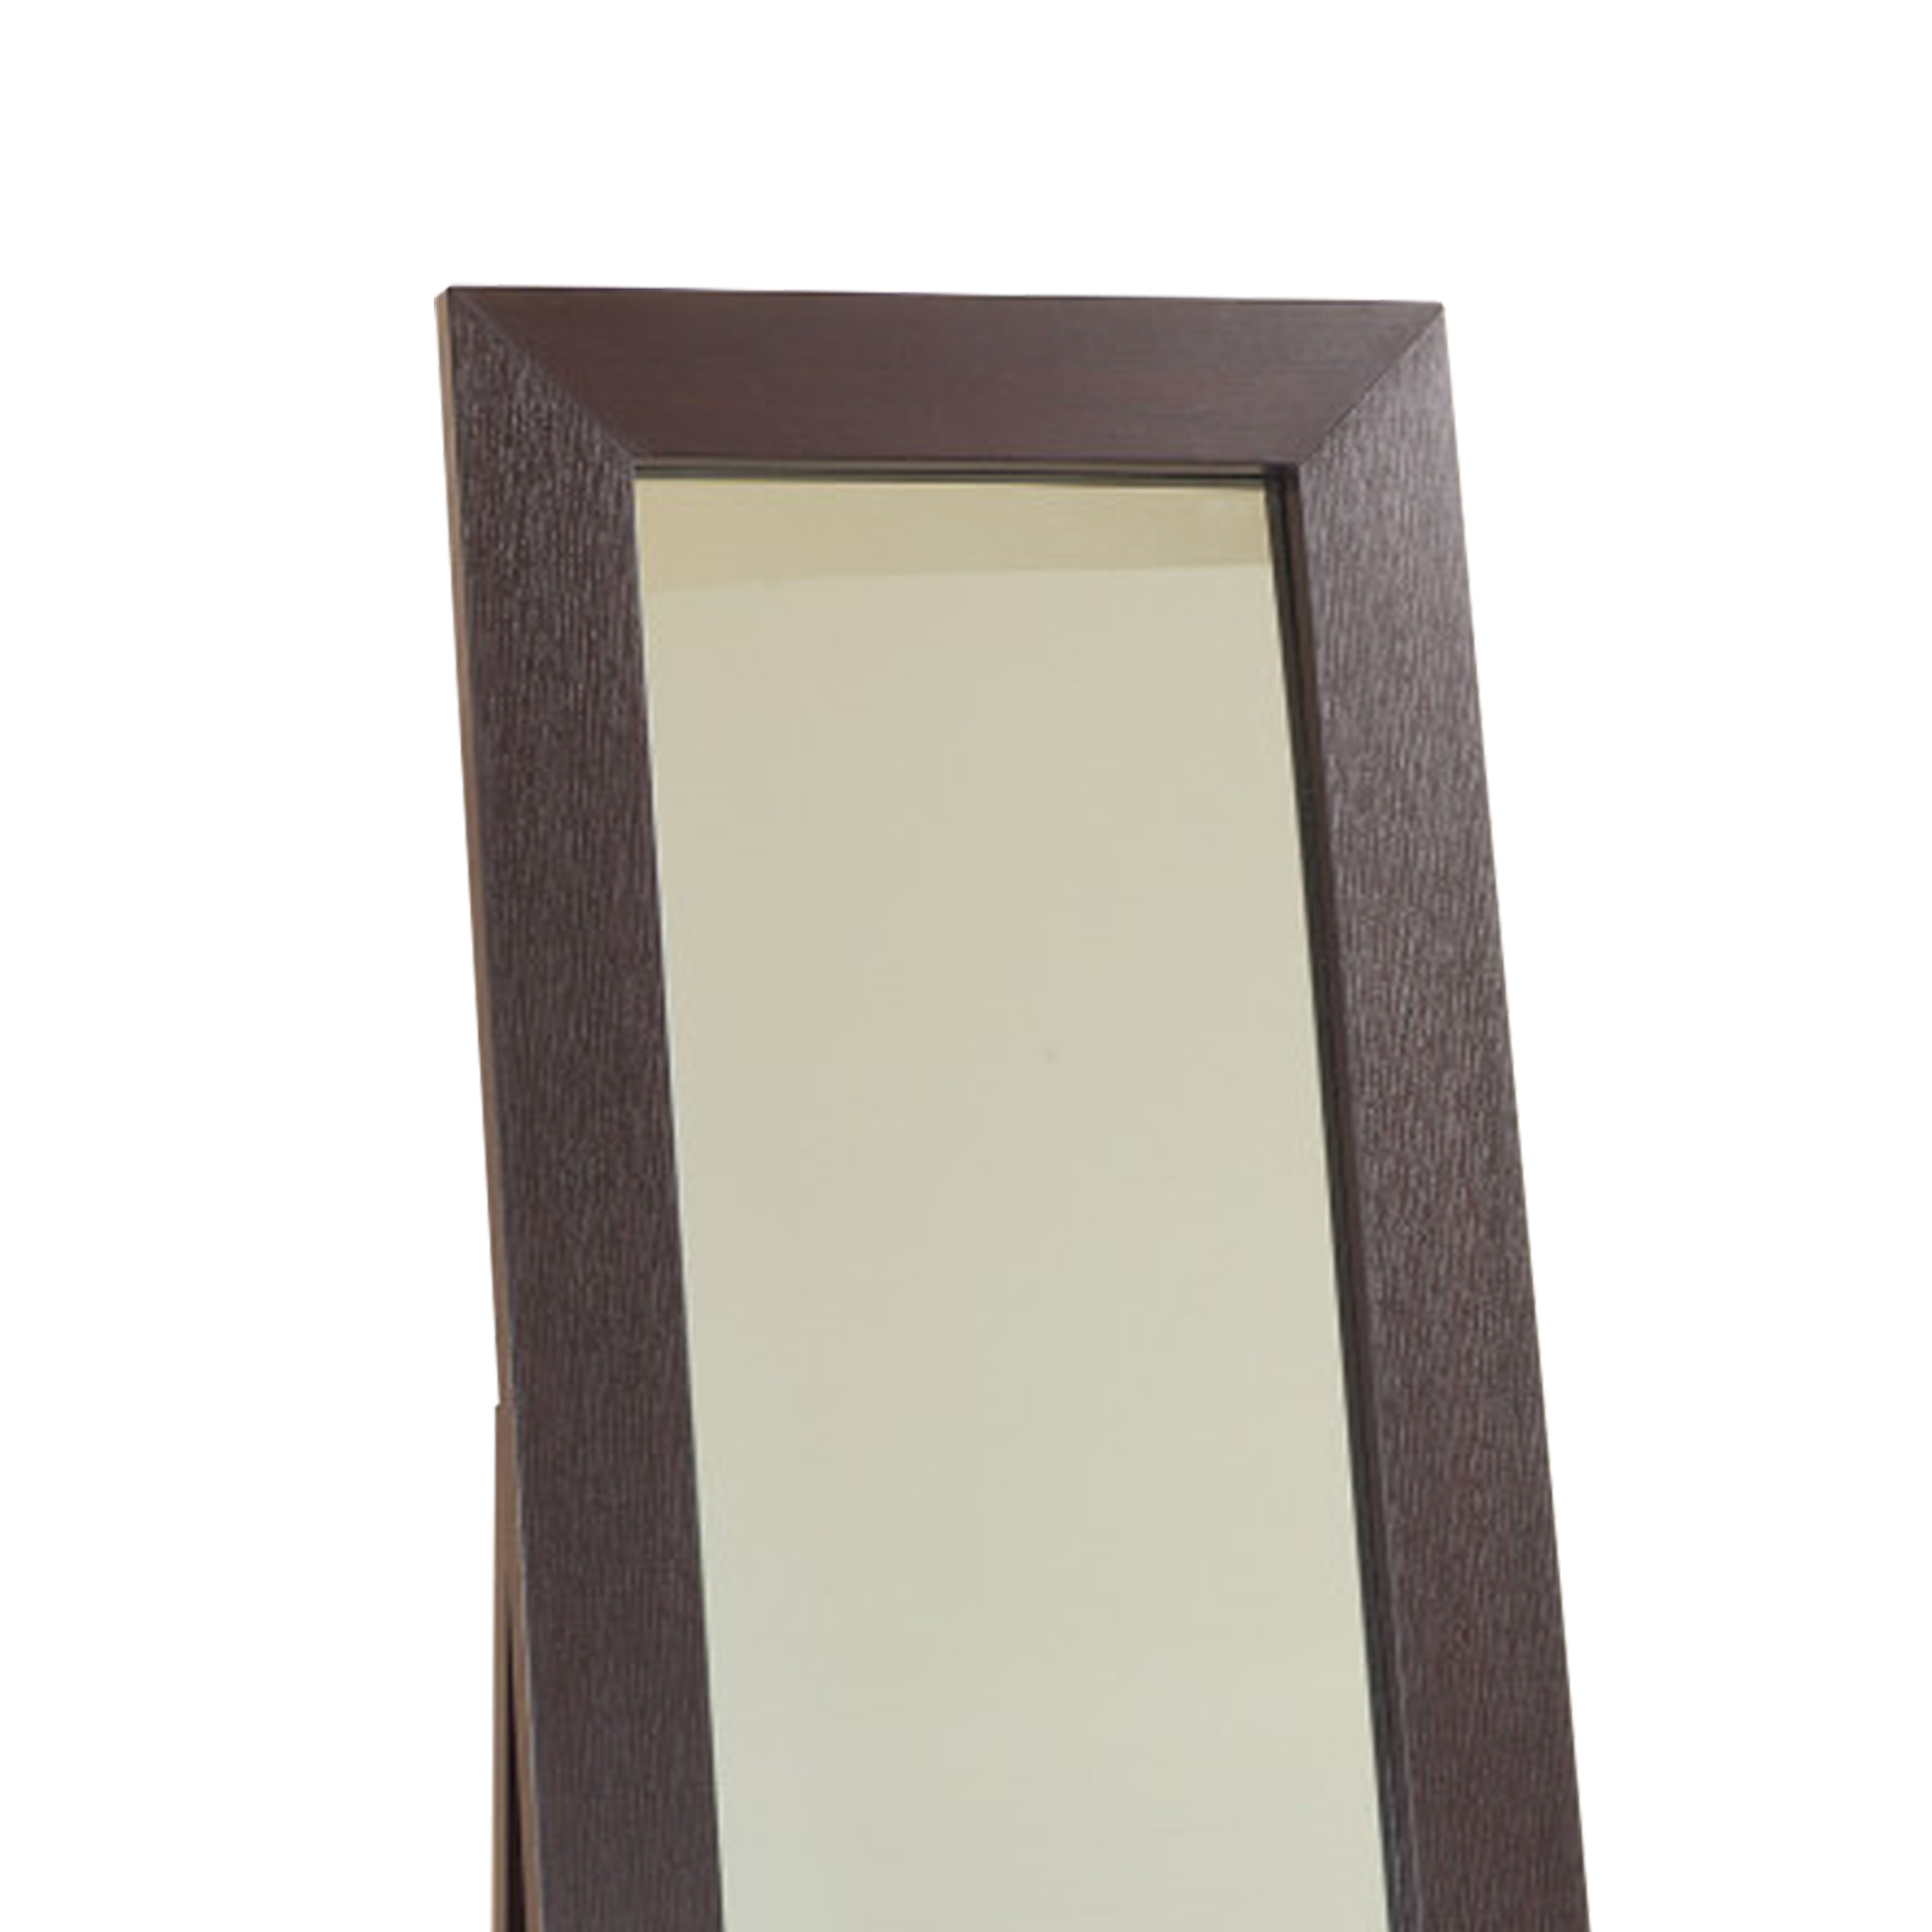 Aesthetic Accent Mirror With Wooden Framing, Dark Brown- Saltoro Sherpi